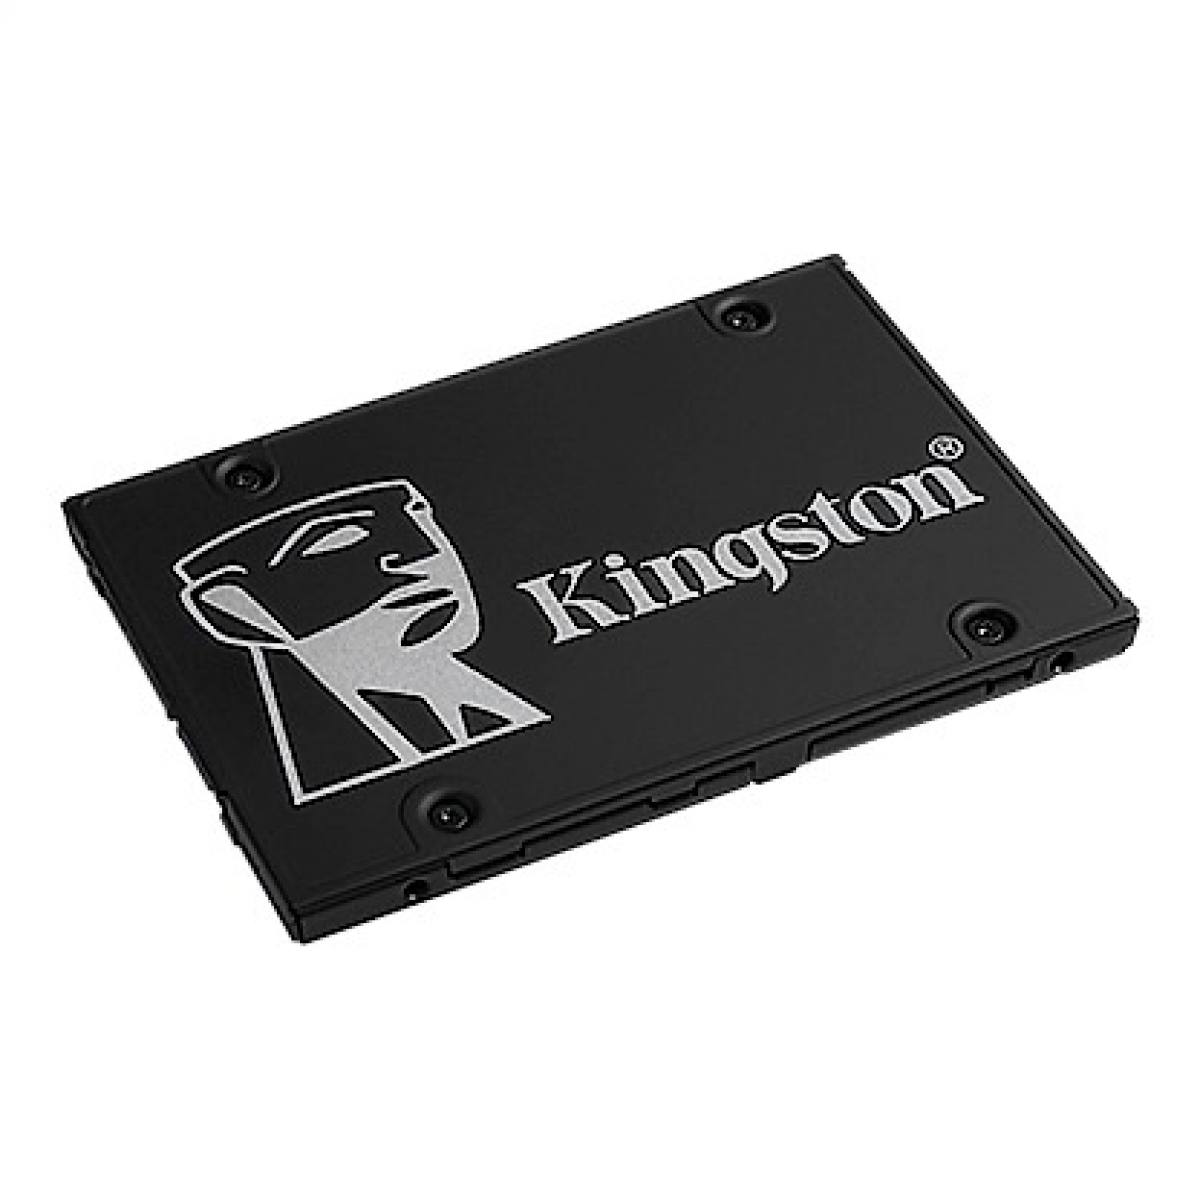 SSD Kingston SKC600 256GB SATA